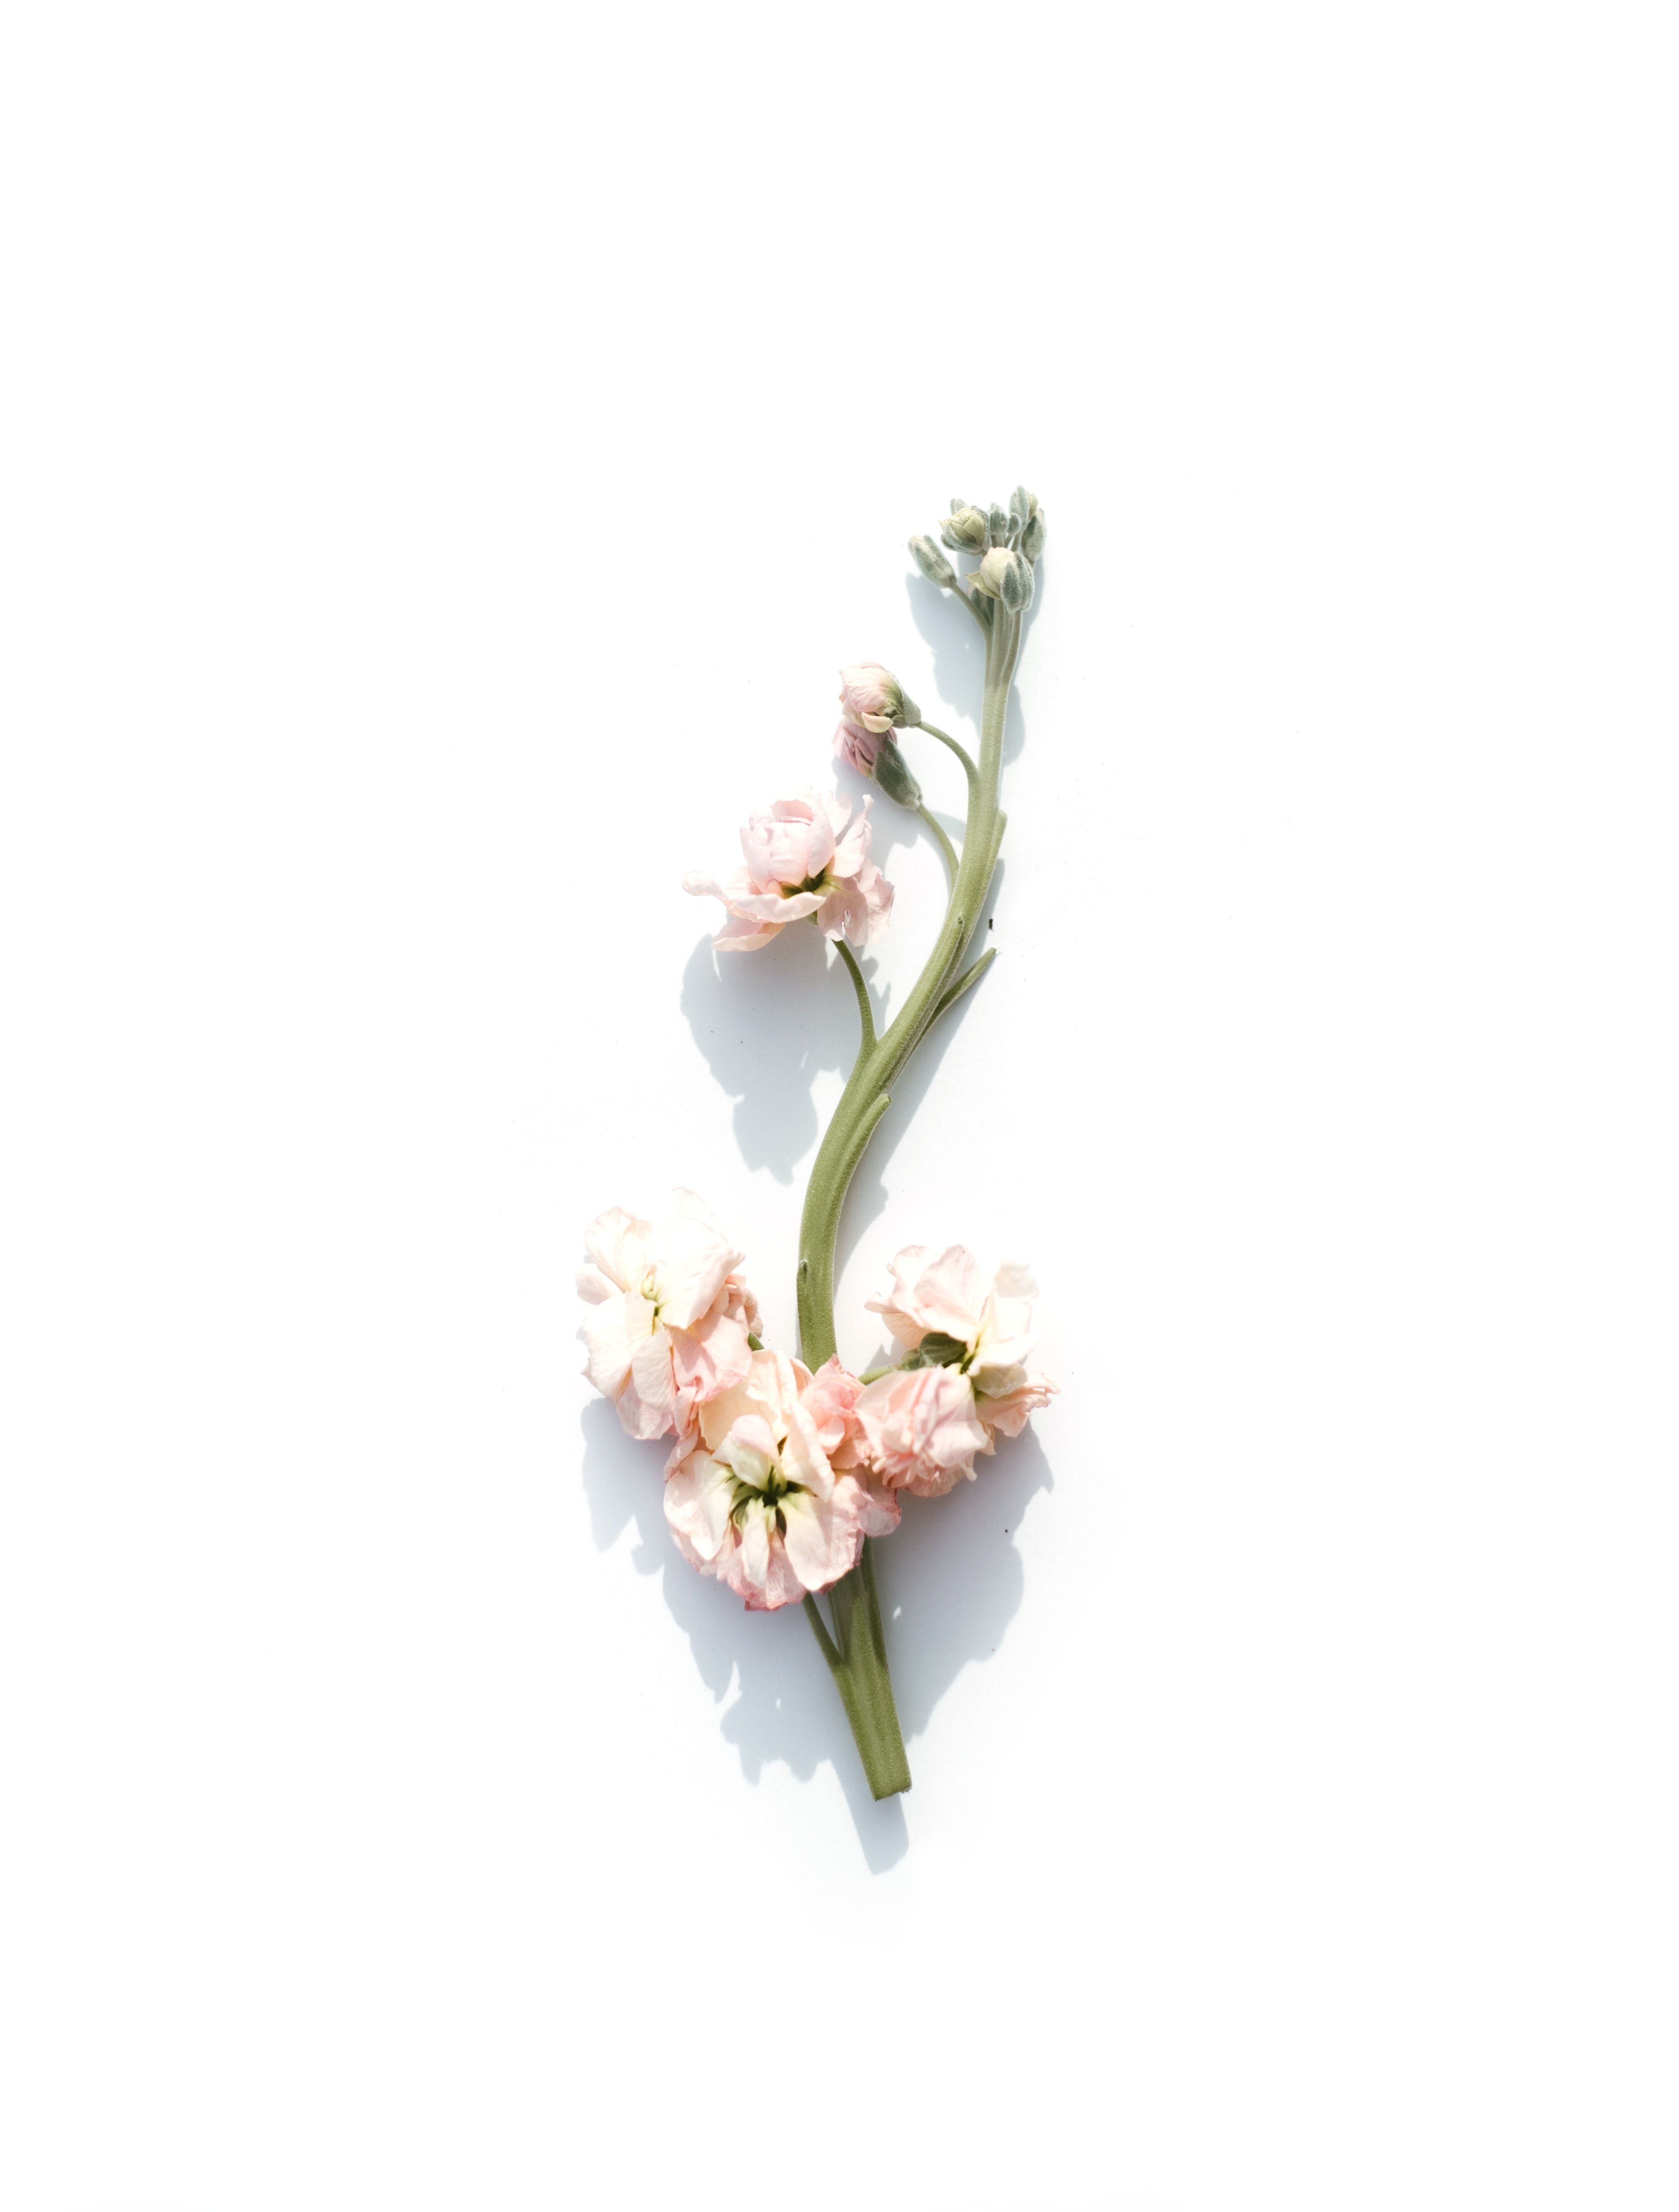 pink petaled flower on white background photo